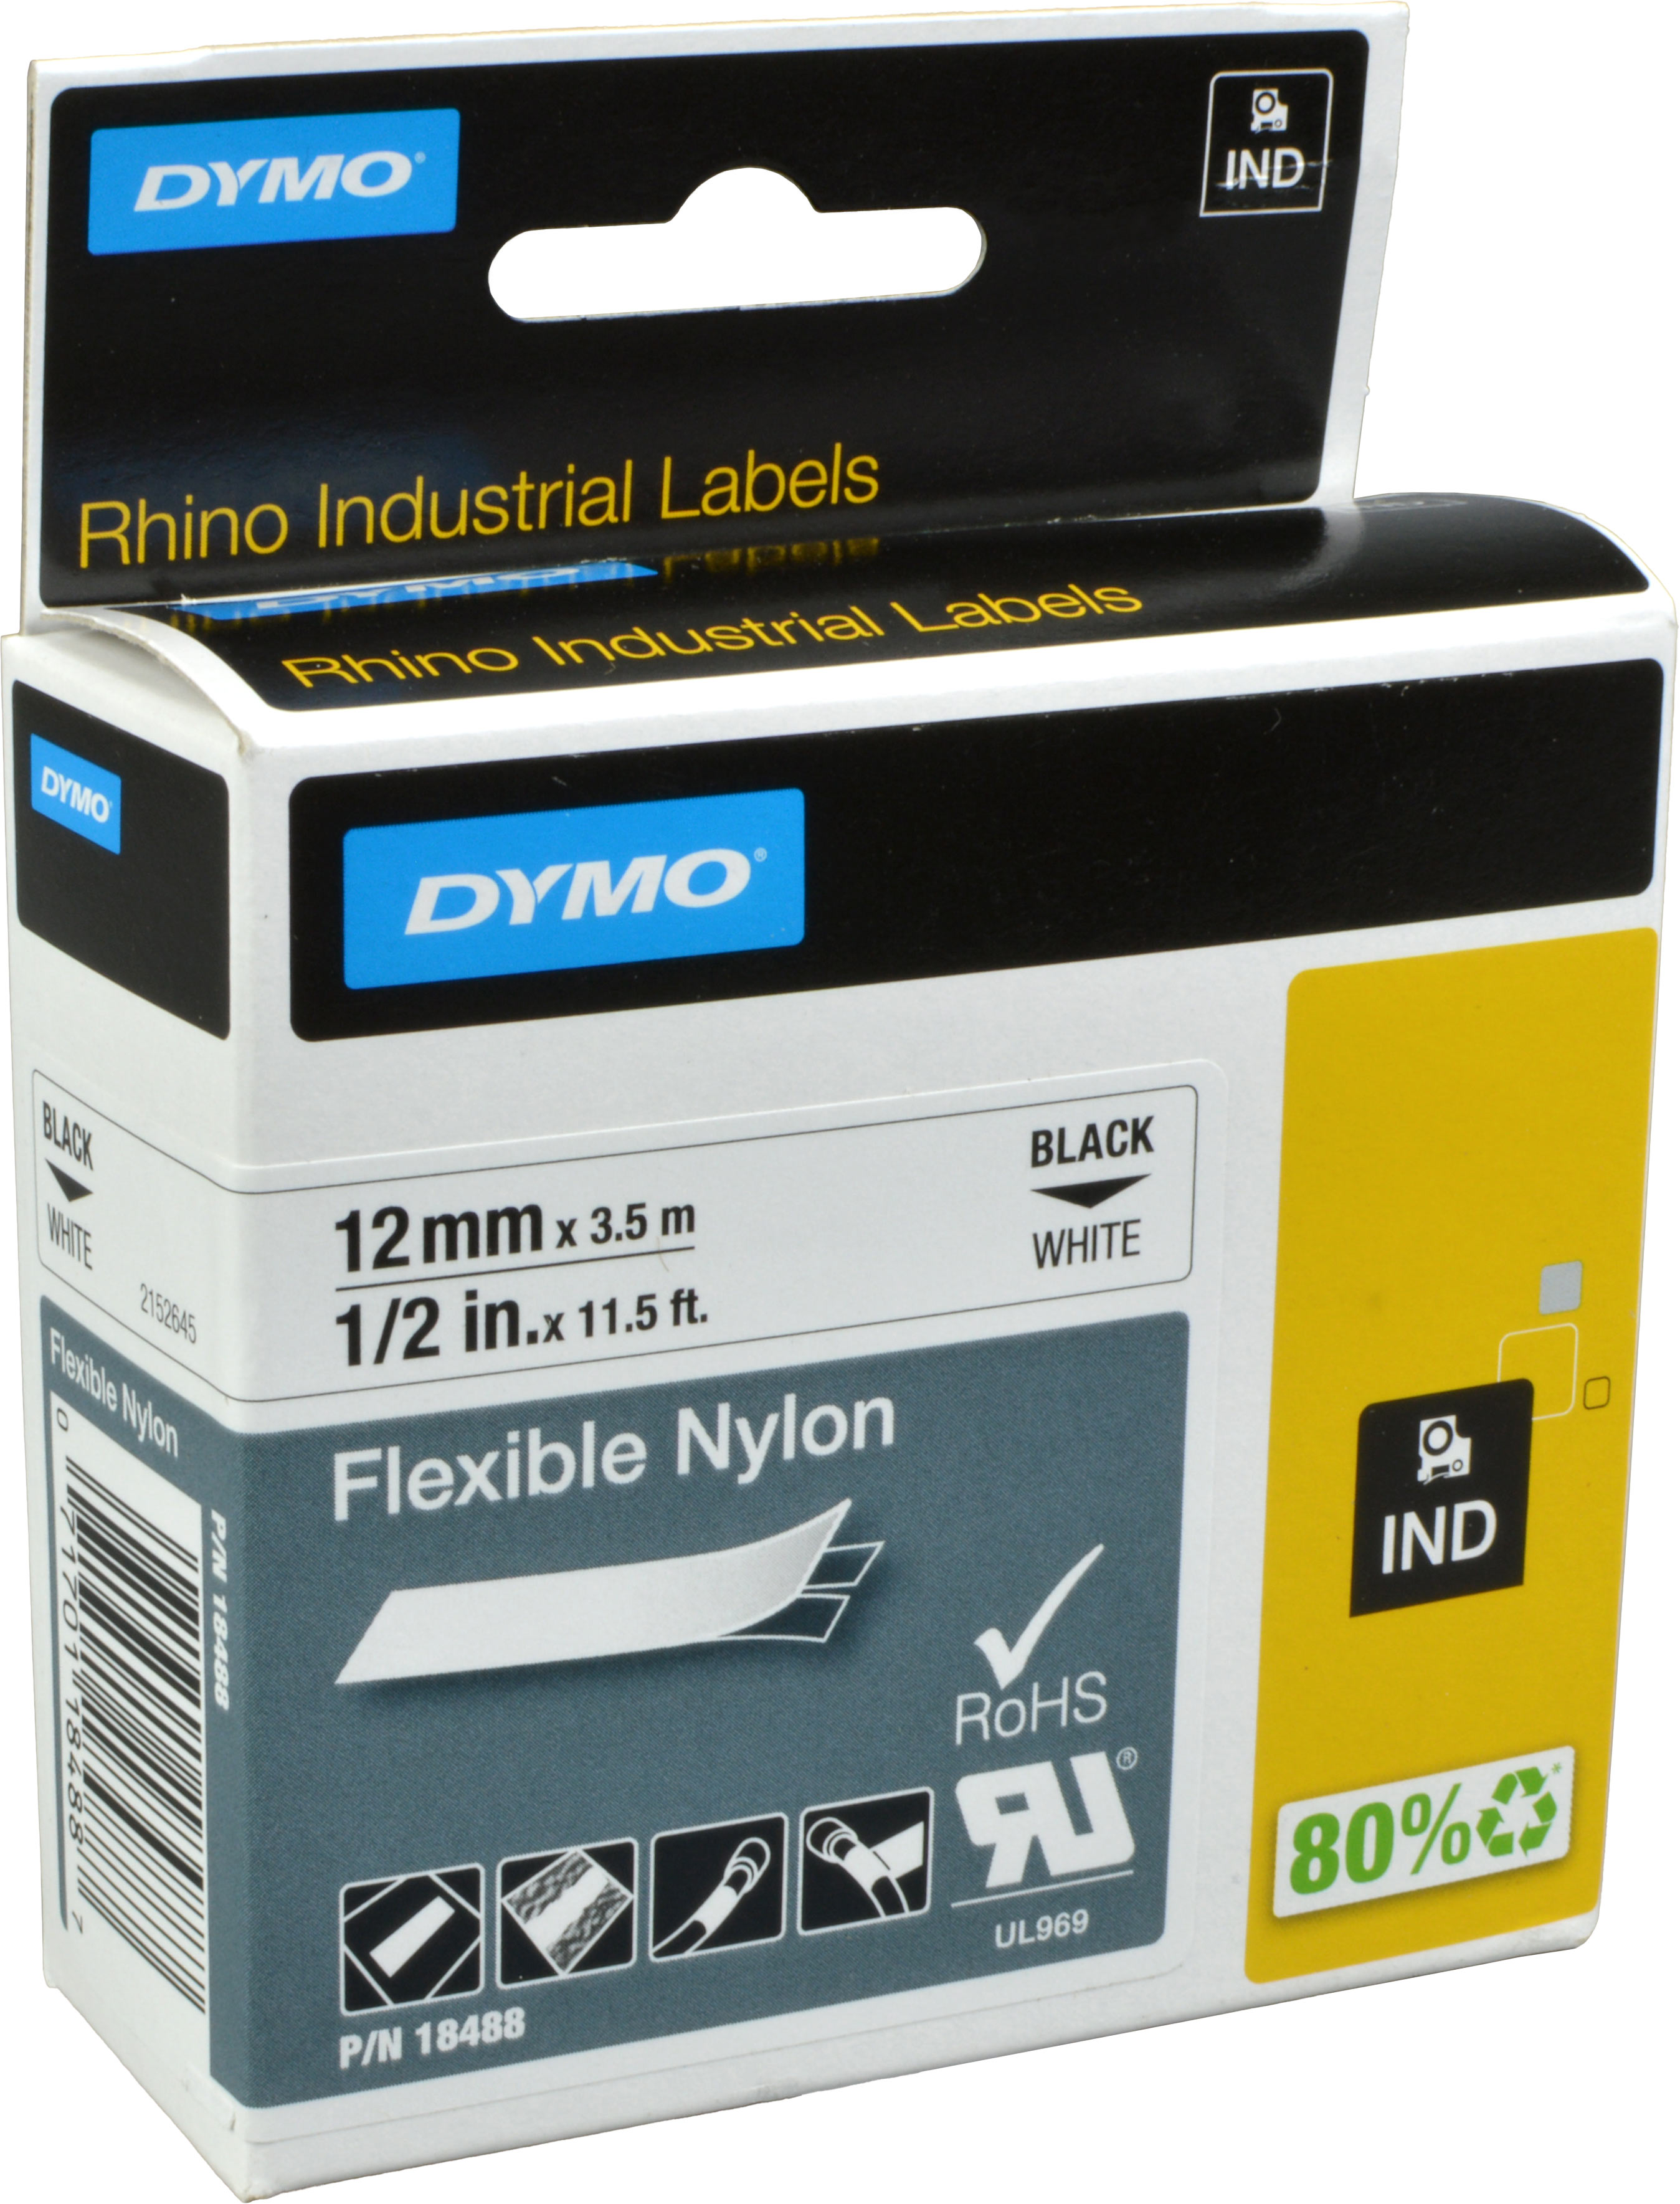 Dymo Originalband 18488  schwarz auf weiß  12mm x 3,5m  Nylon flexibel